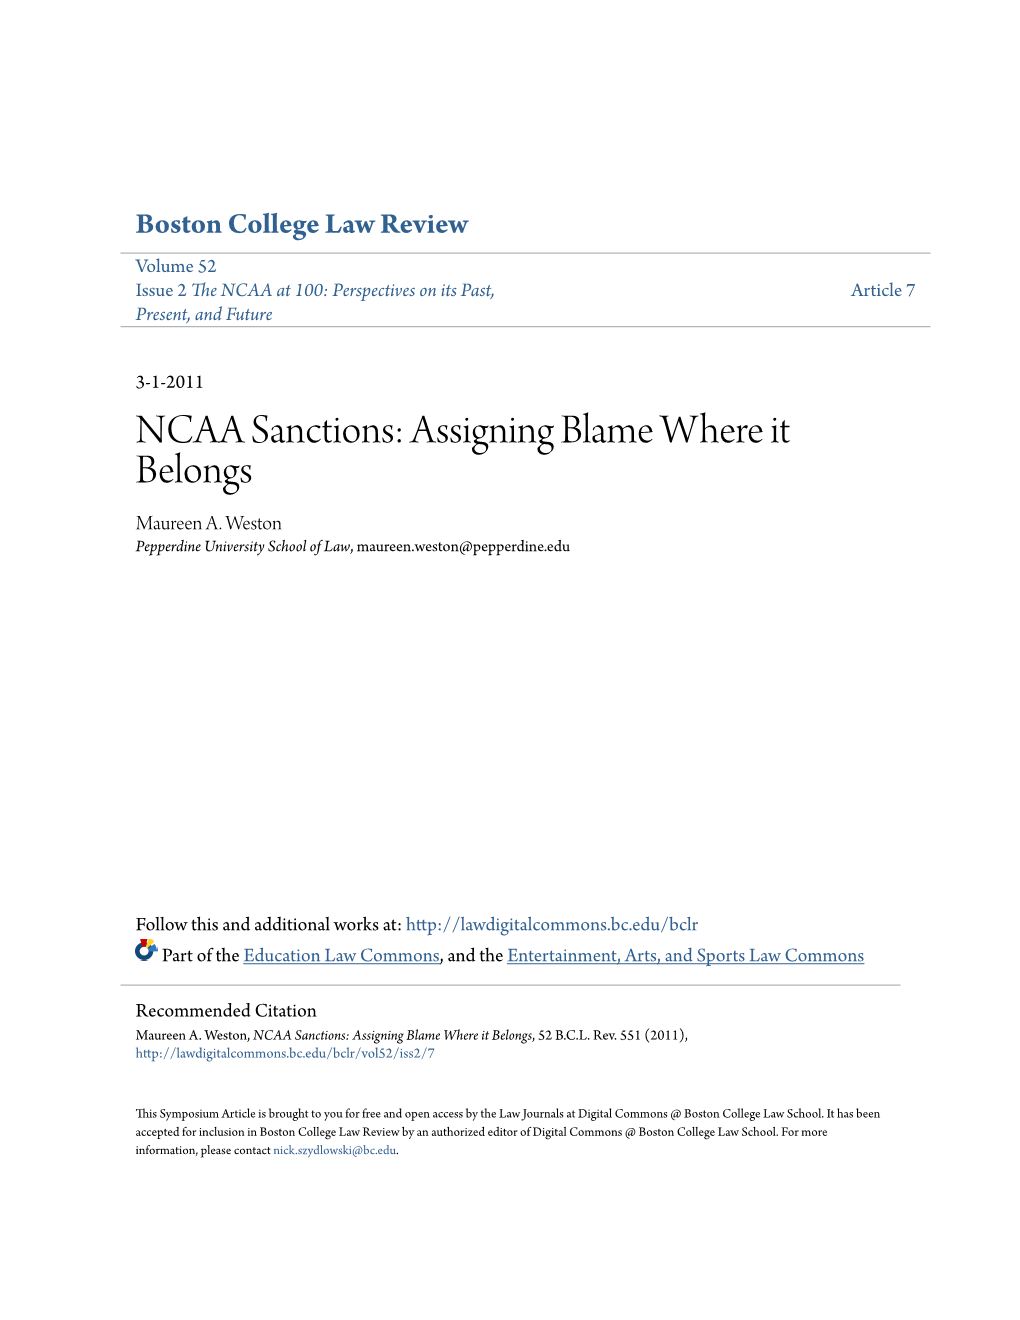 NCAA Sanctions: Assigning Blame Where It Belongs Maureen A